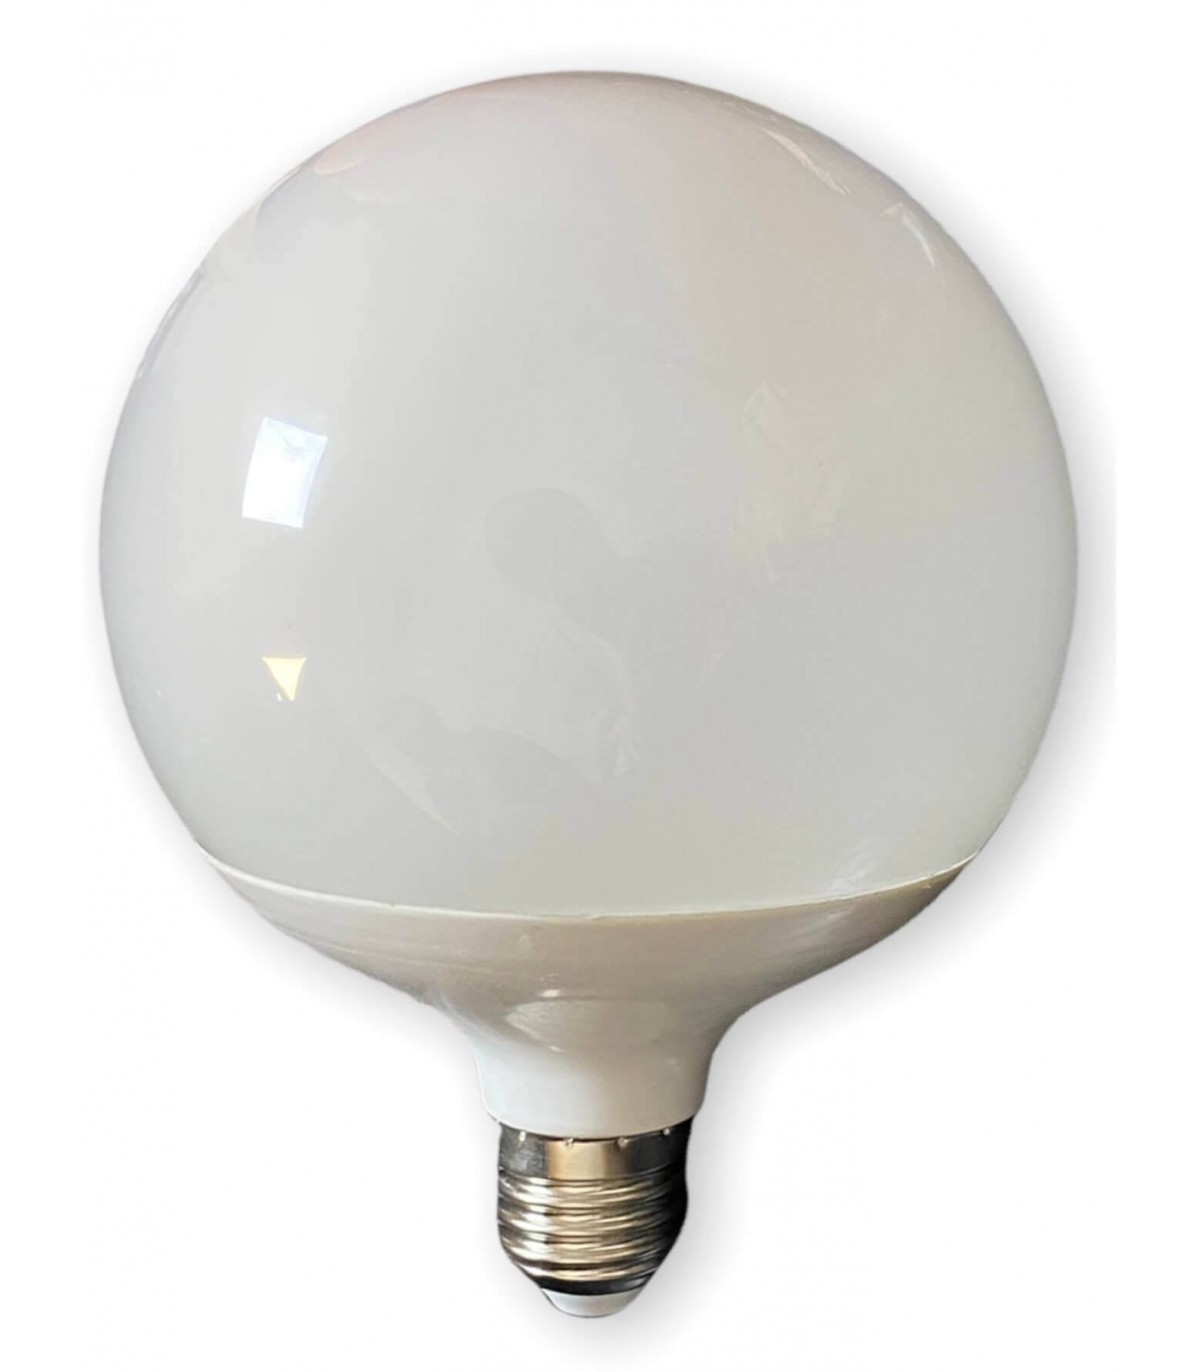 Philips Ampoule LED, blanc froid, E27, 100W 